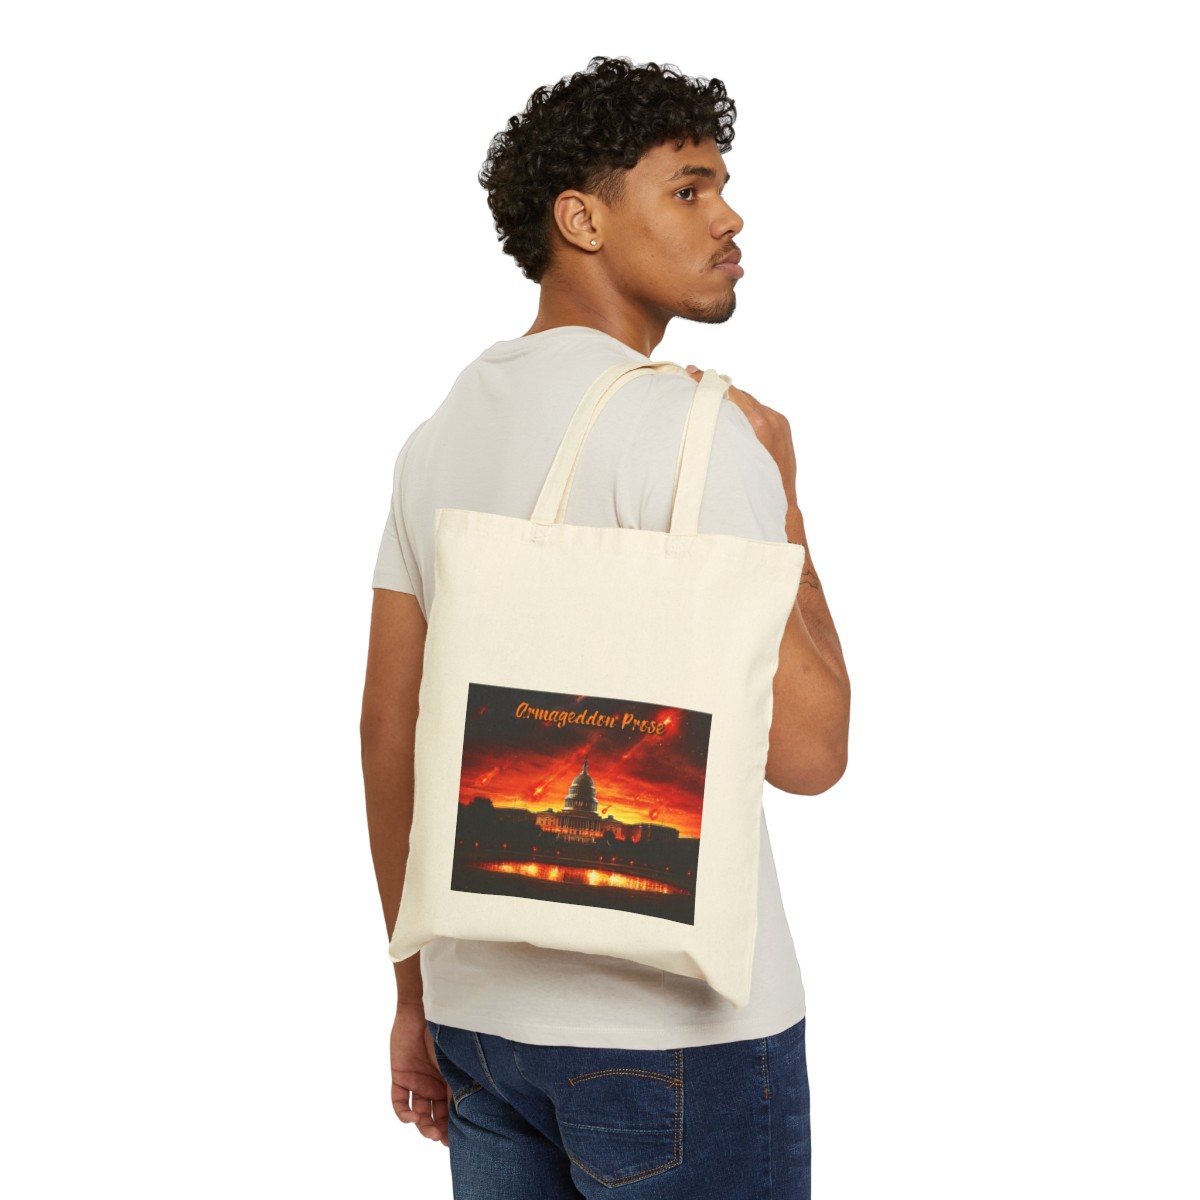 Cotton Canvas Tote Bag "Armageddon Prose" product thumbnail image